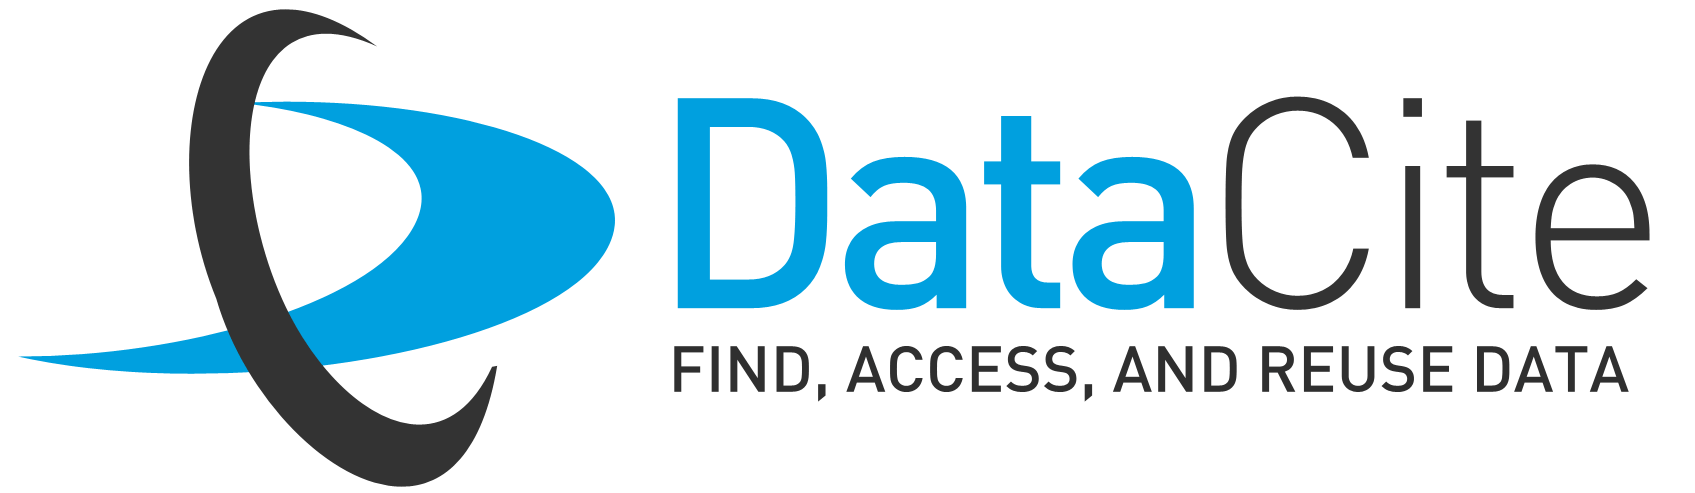 DataCite logo